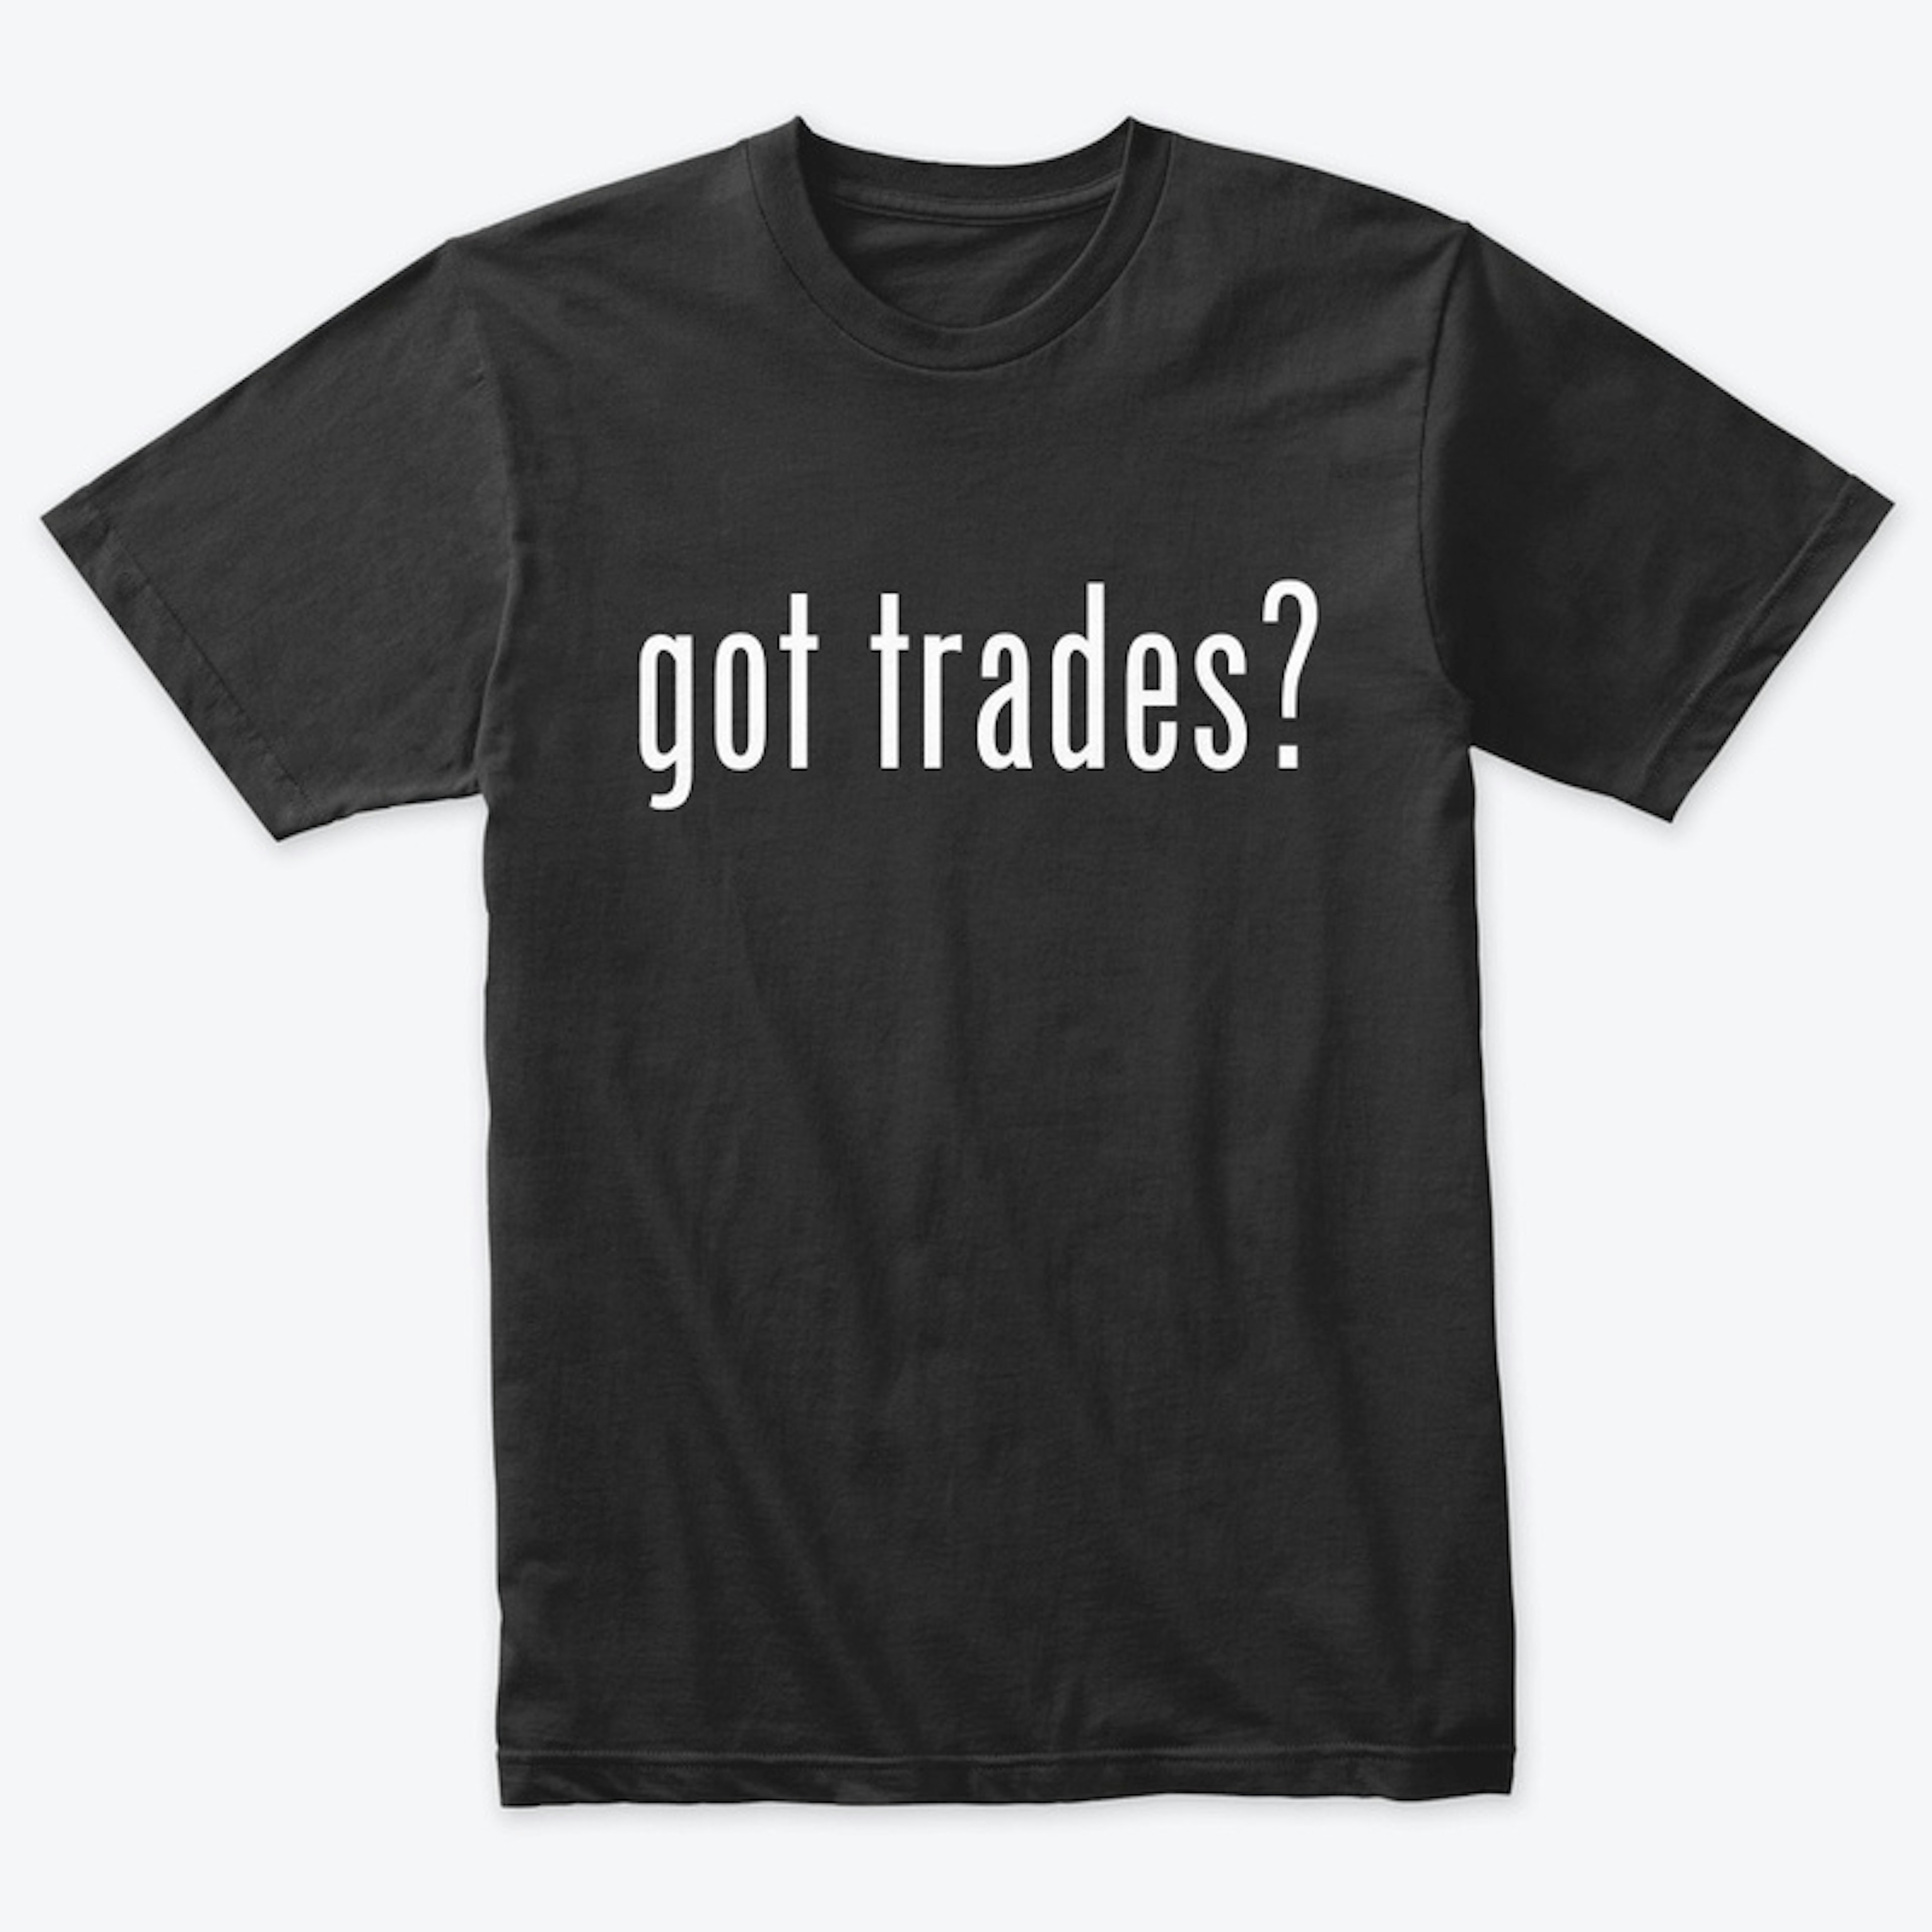 "got trades?" iGetTrades Tee